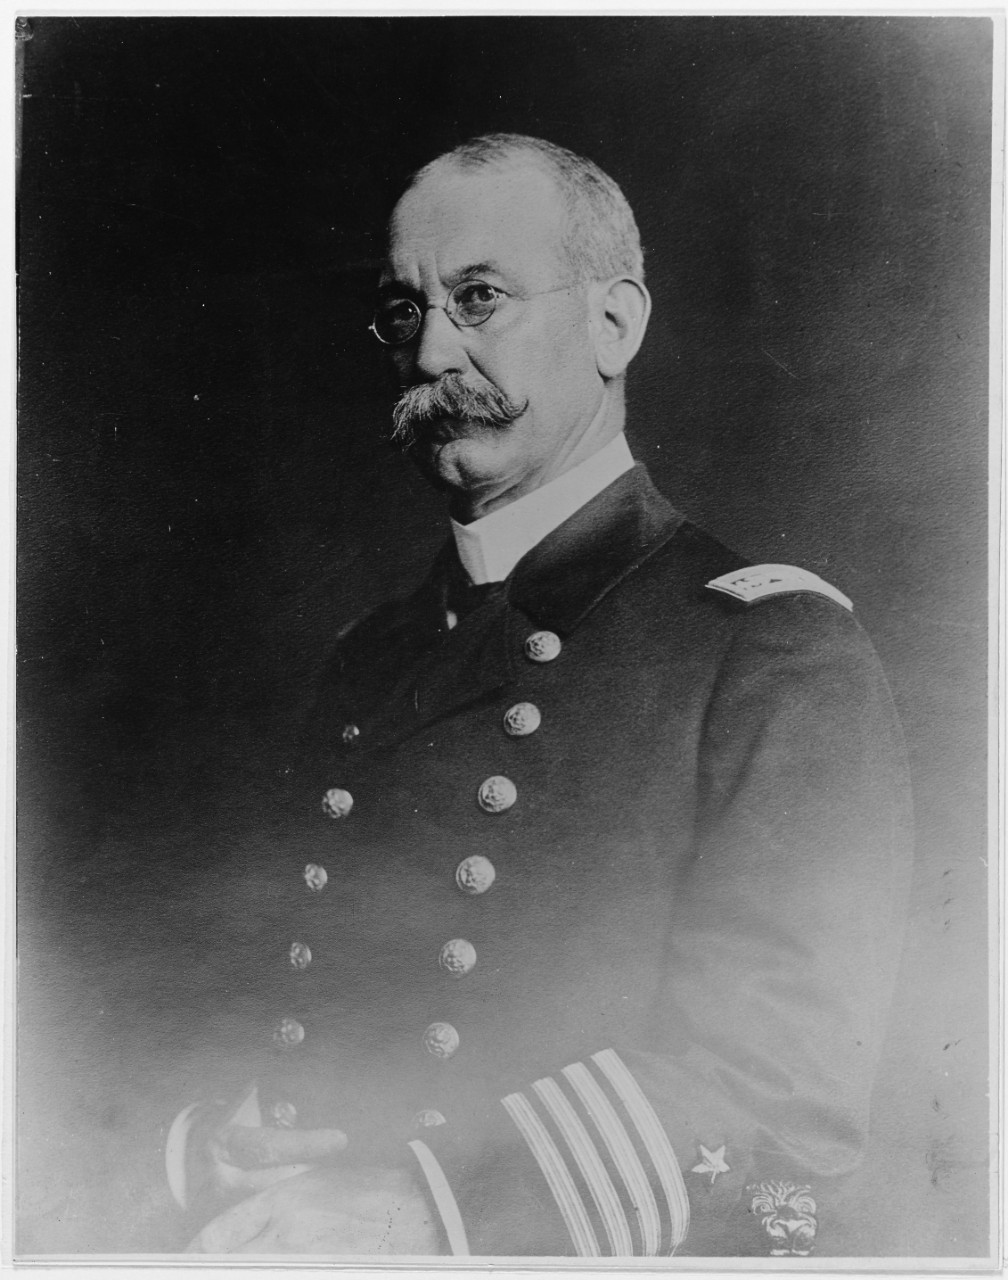 Portrait of Captain Charles D. Sigsbee, USN, circa 1897.